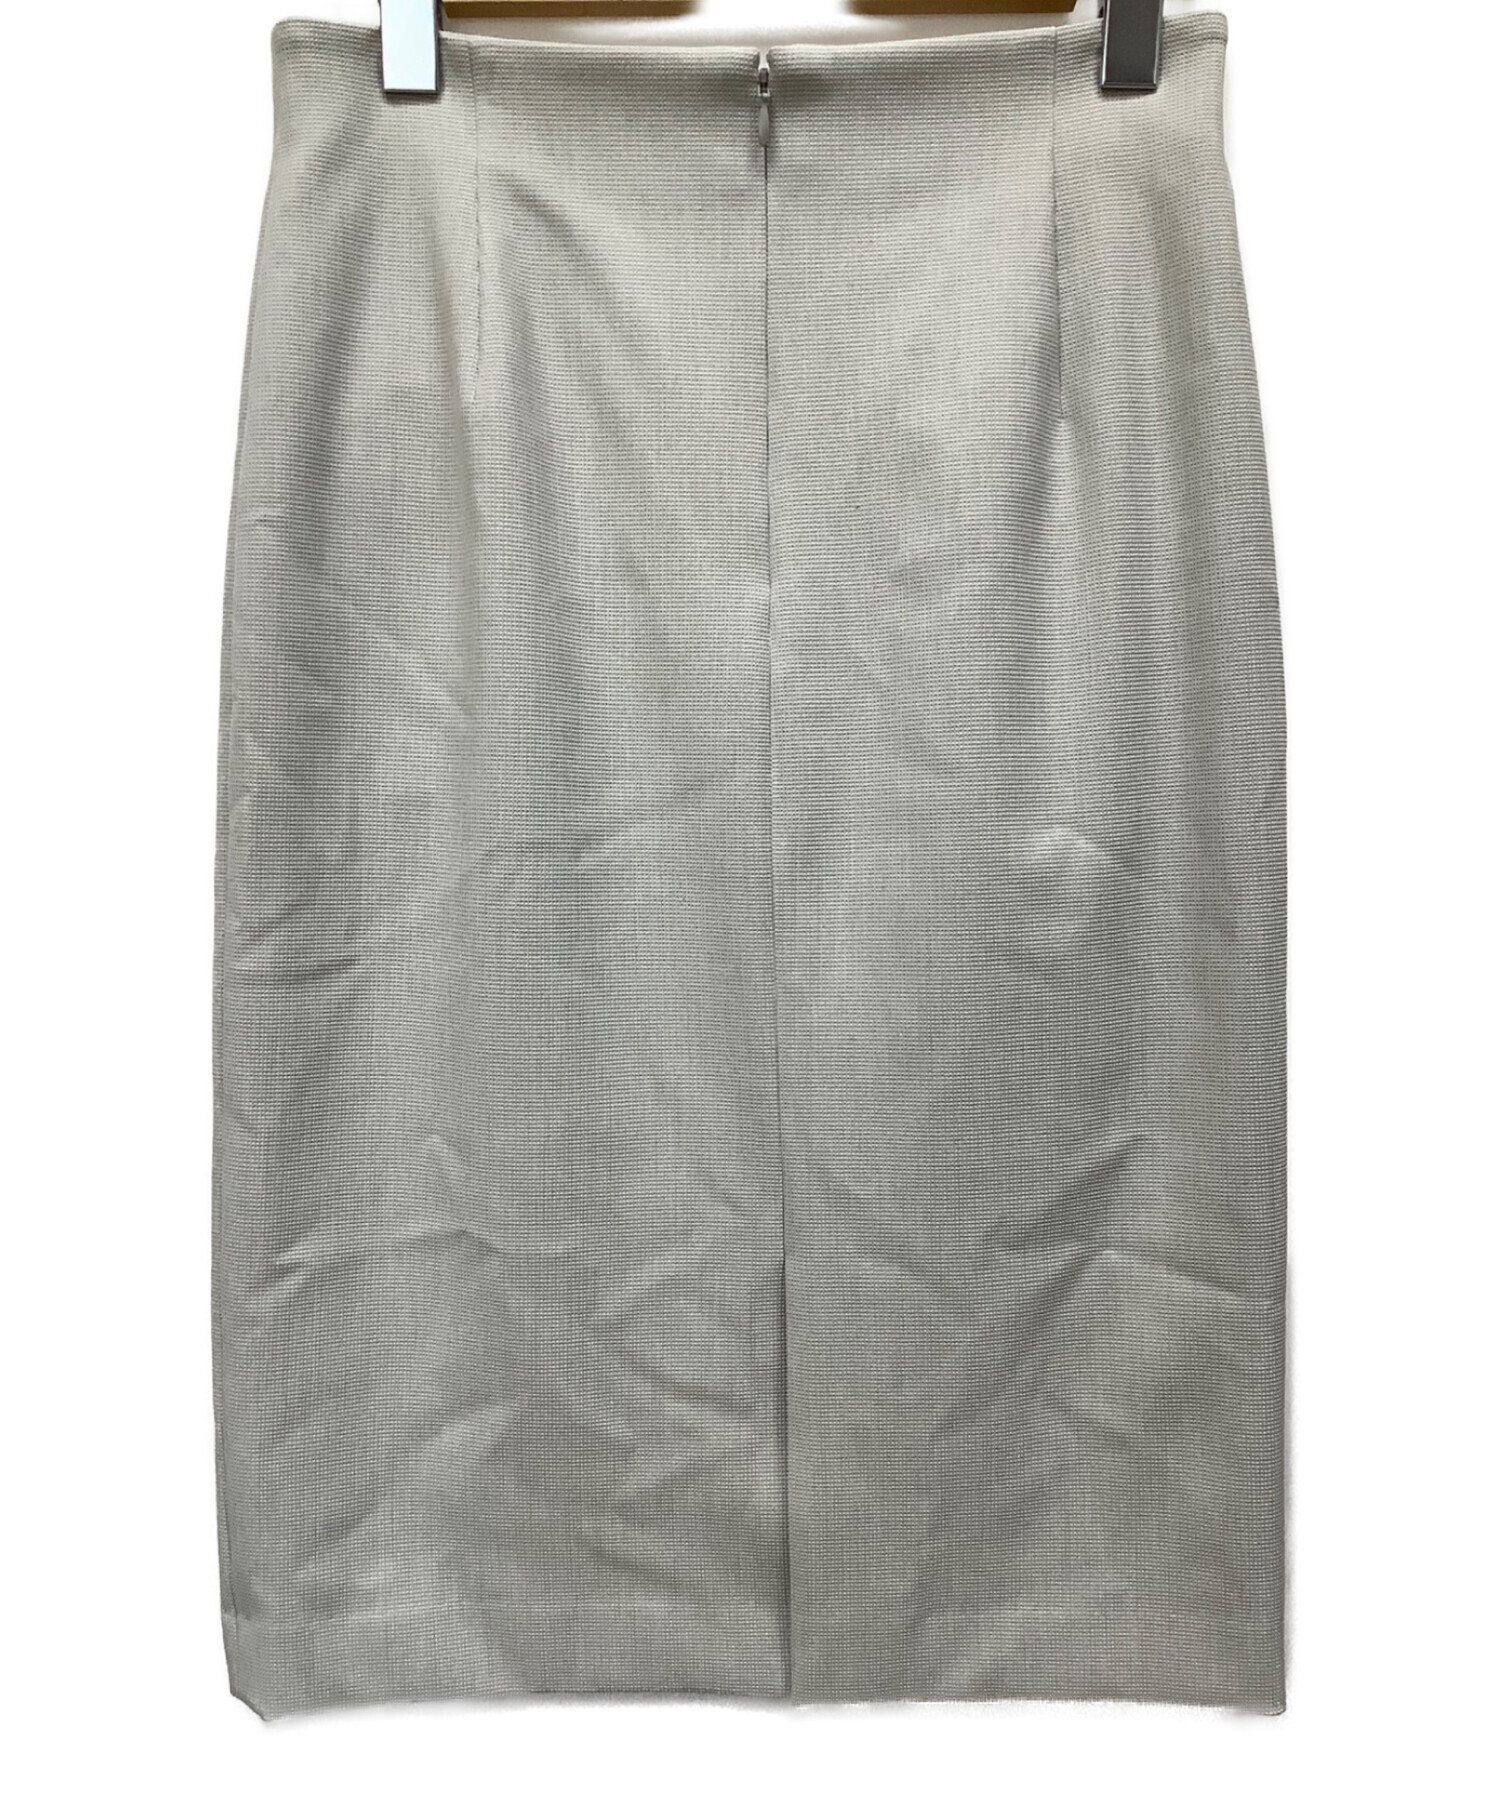 COUP DE CHANCE (クードシャンス) スーツスカート グレー サイズ:38 未使用品